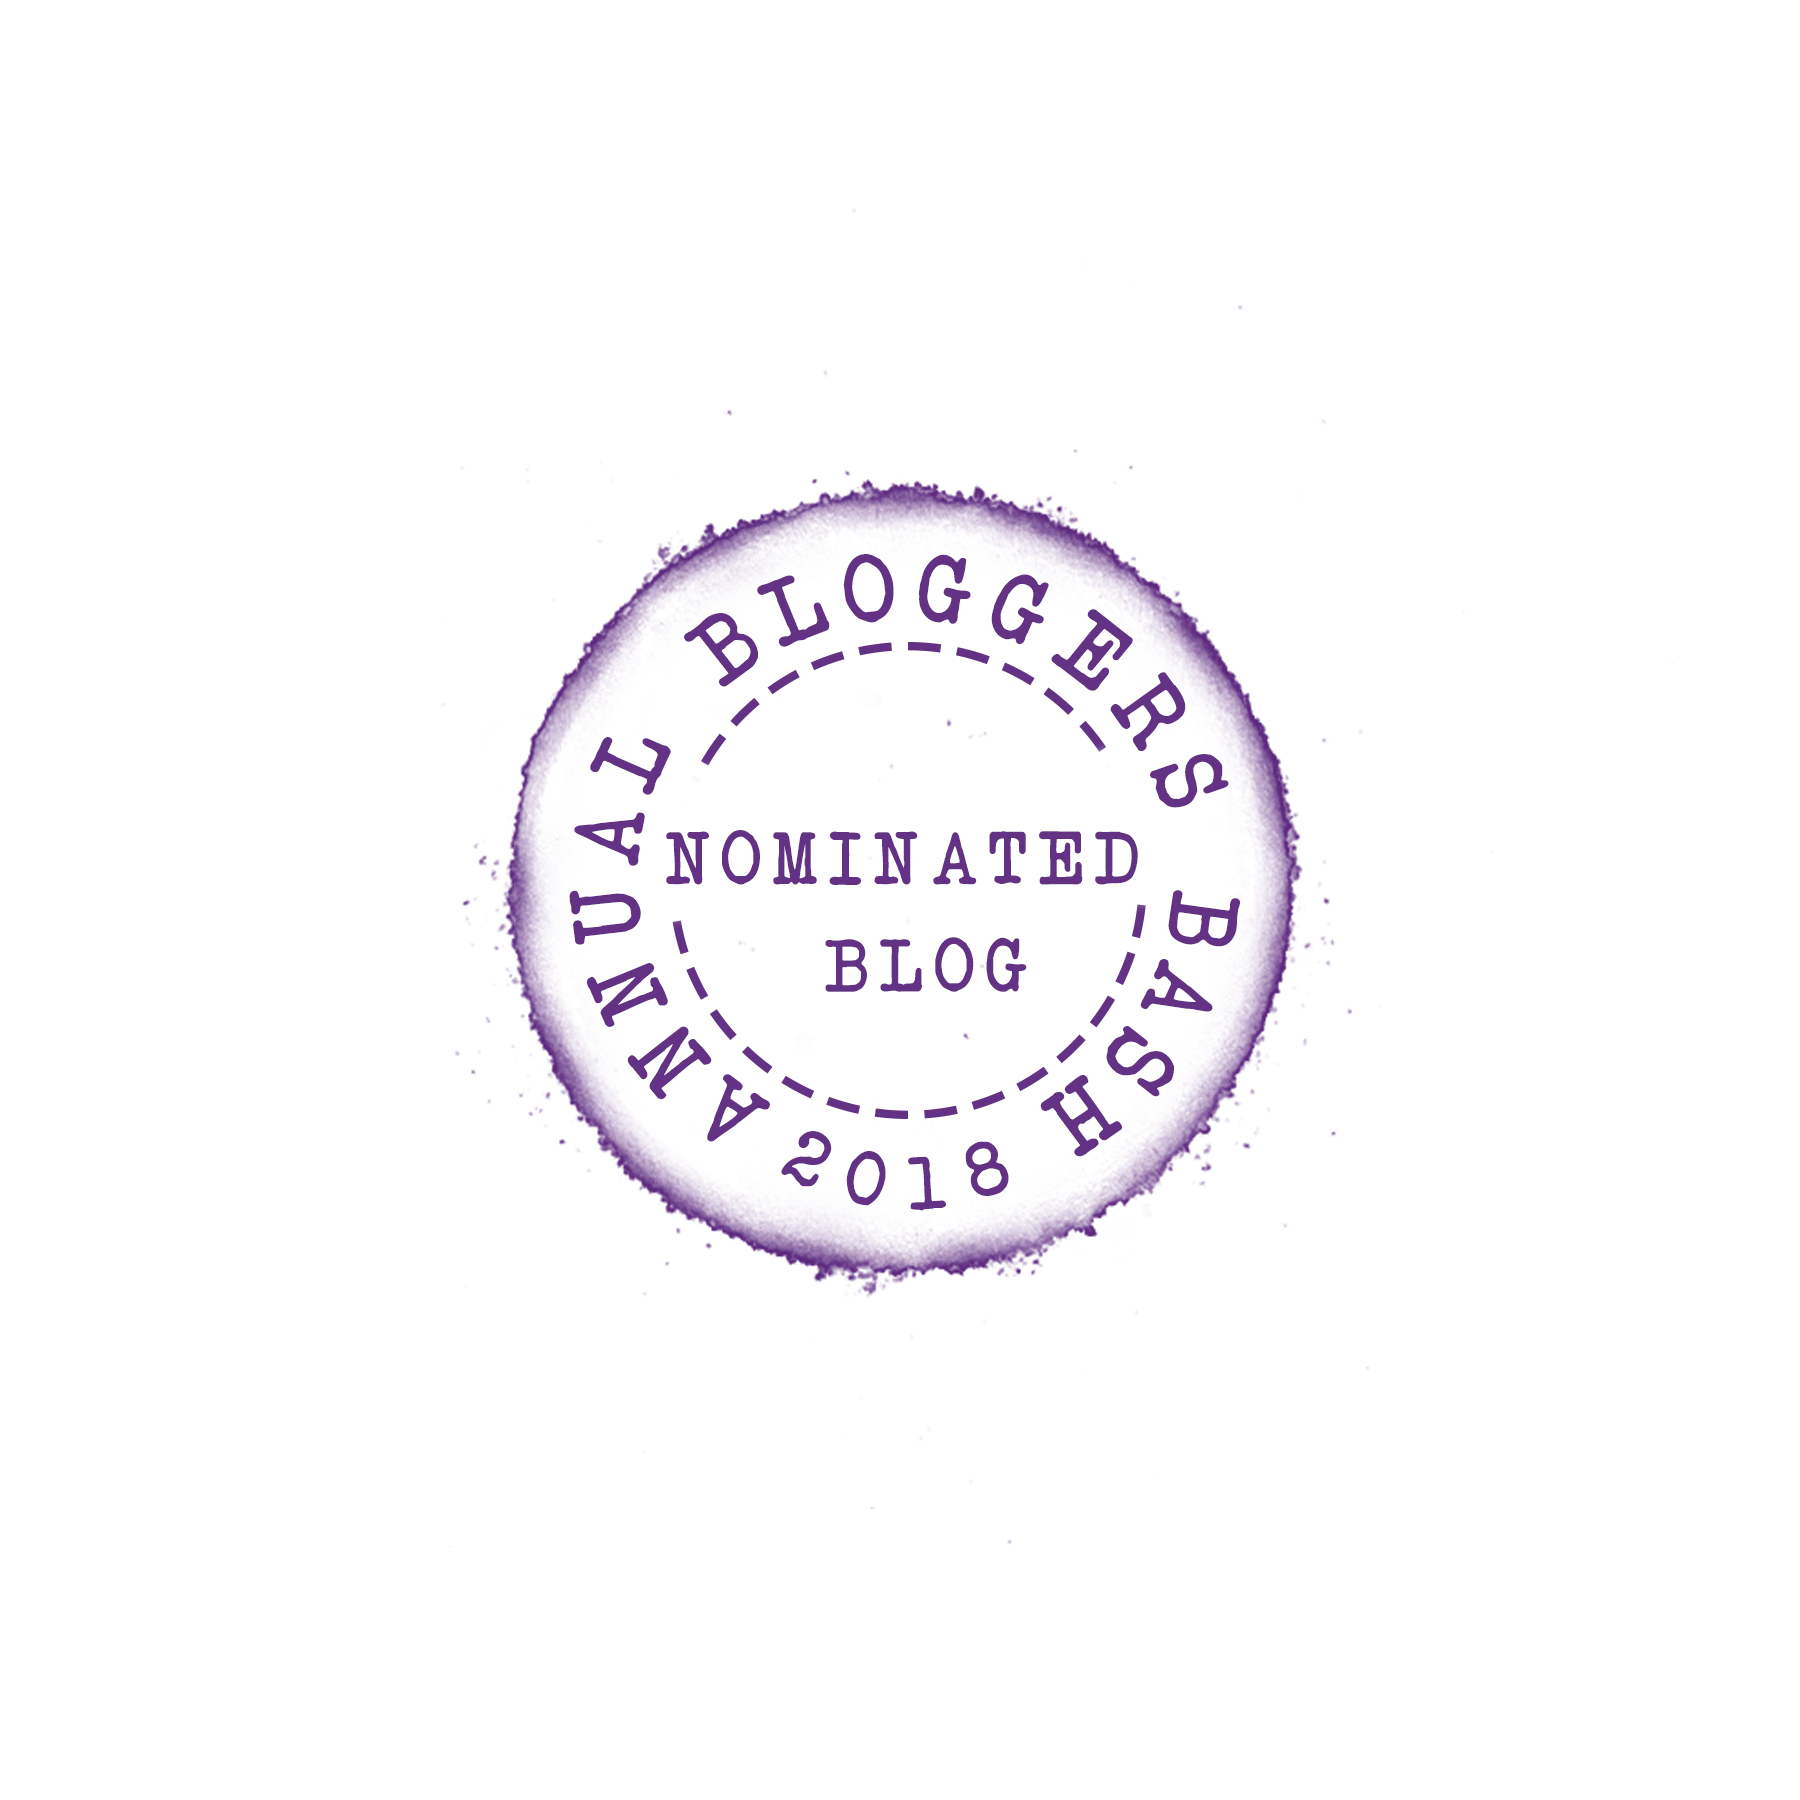 ABB Nominated Blog 2018